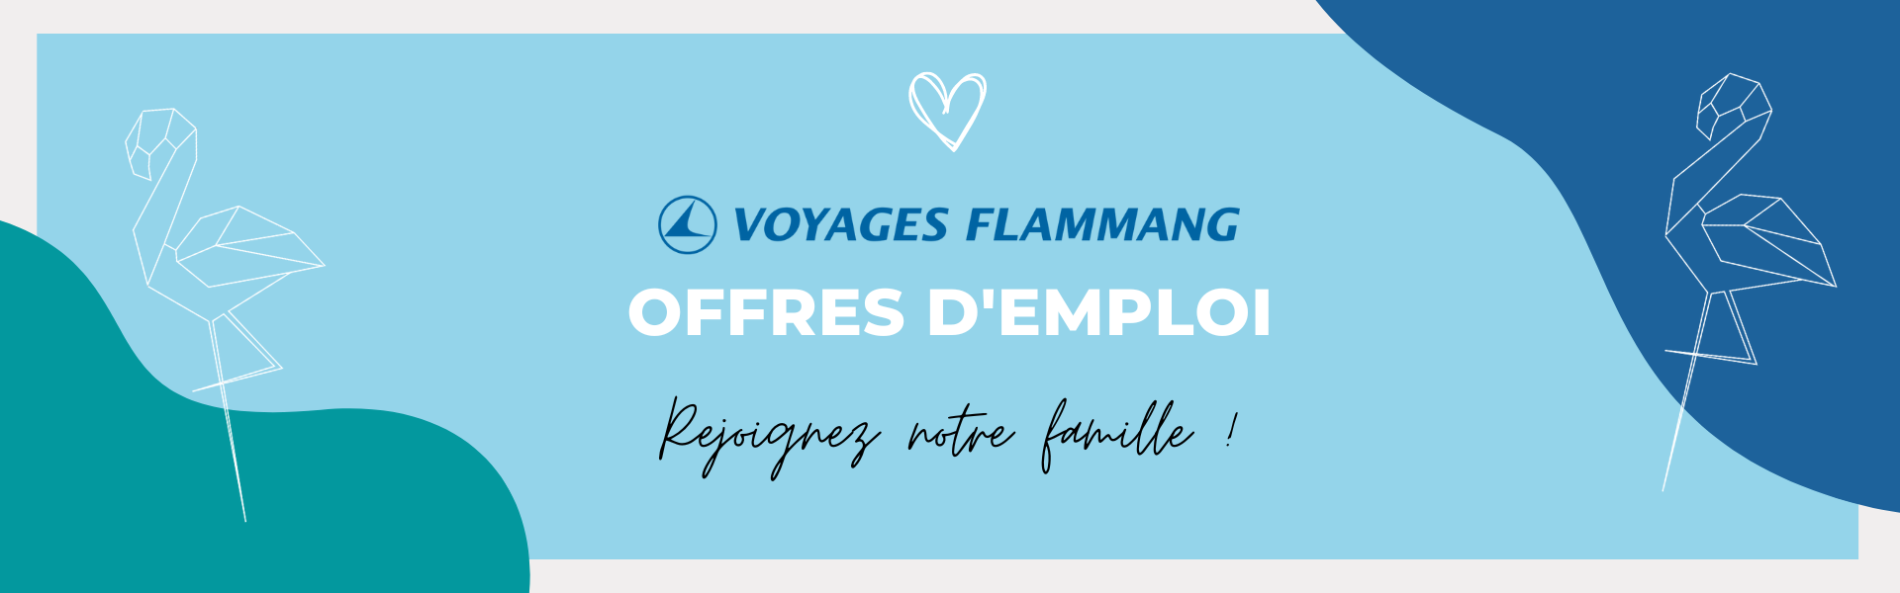 voyage flammang jobs